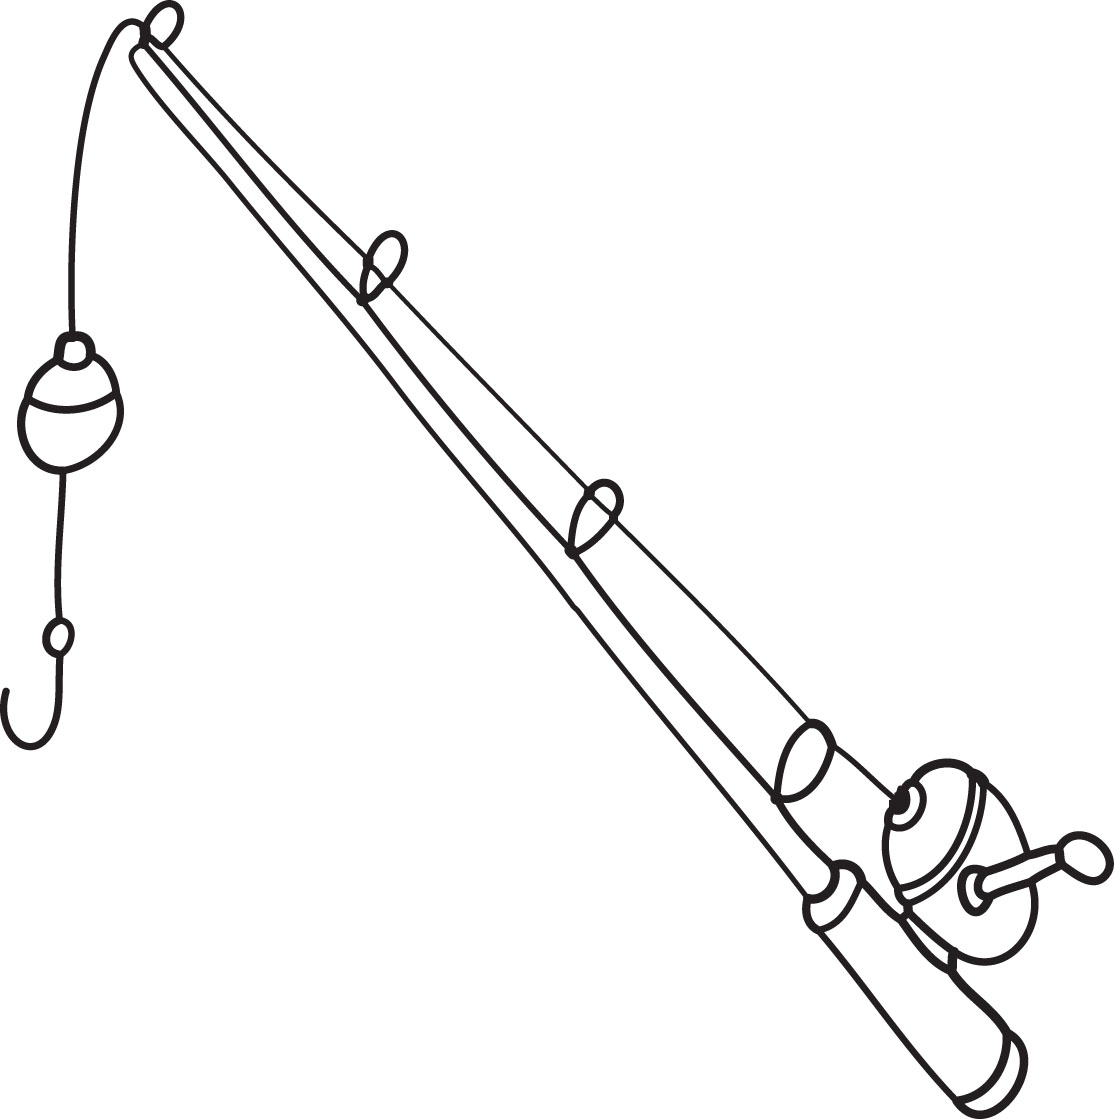 Fishing pole clipart - hang a